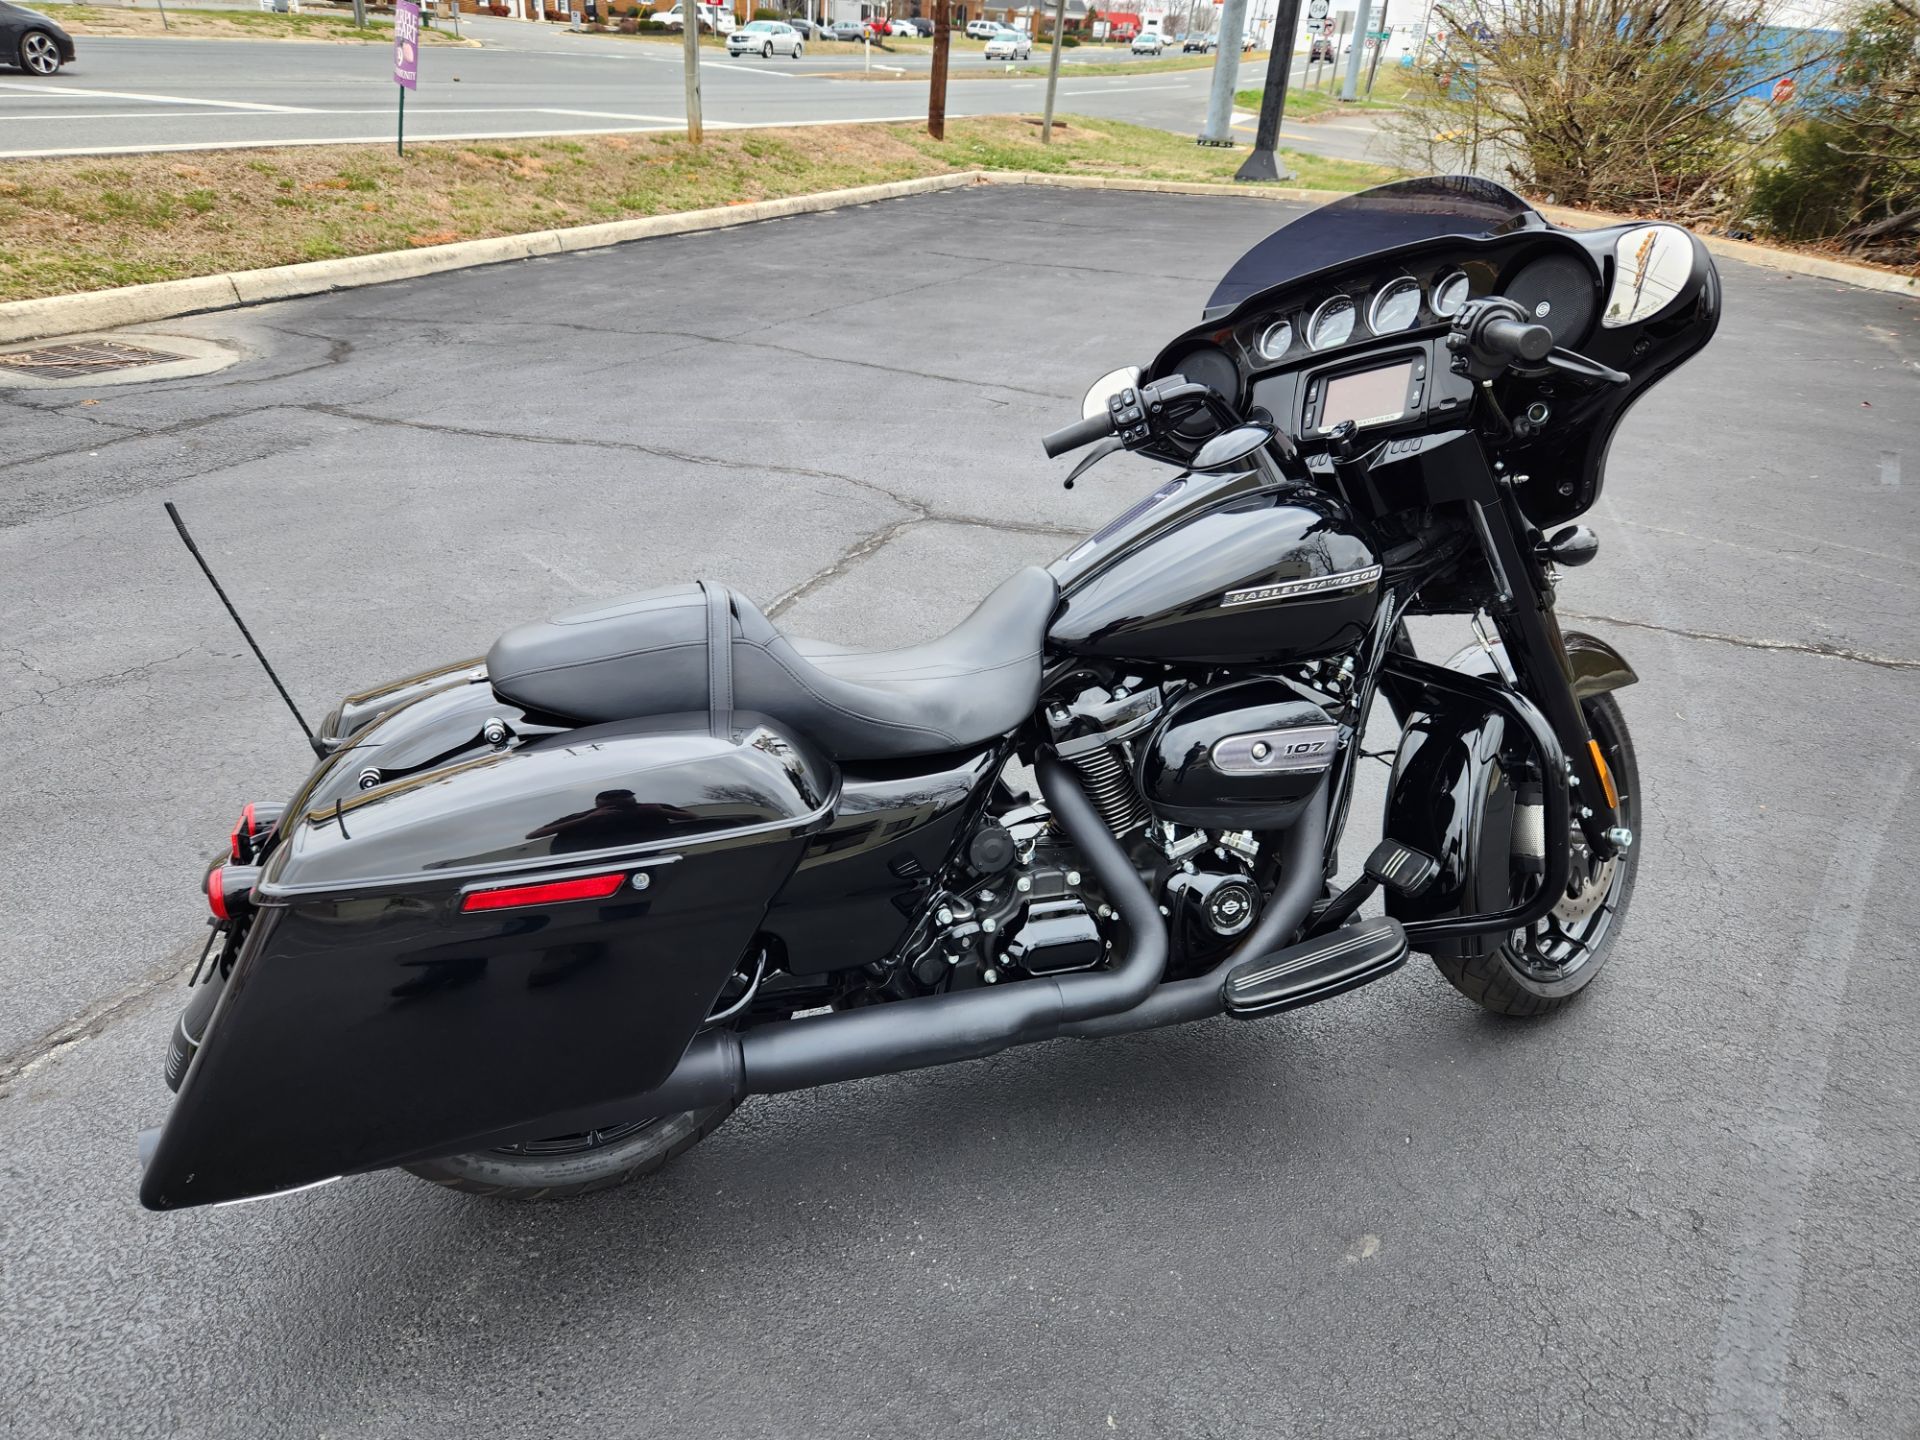 2018 Harley-Davidson Street Glide® Special in Lynchburg, Virginia - Photo 14